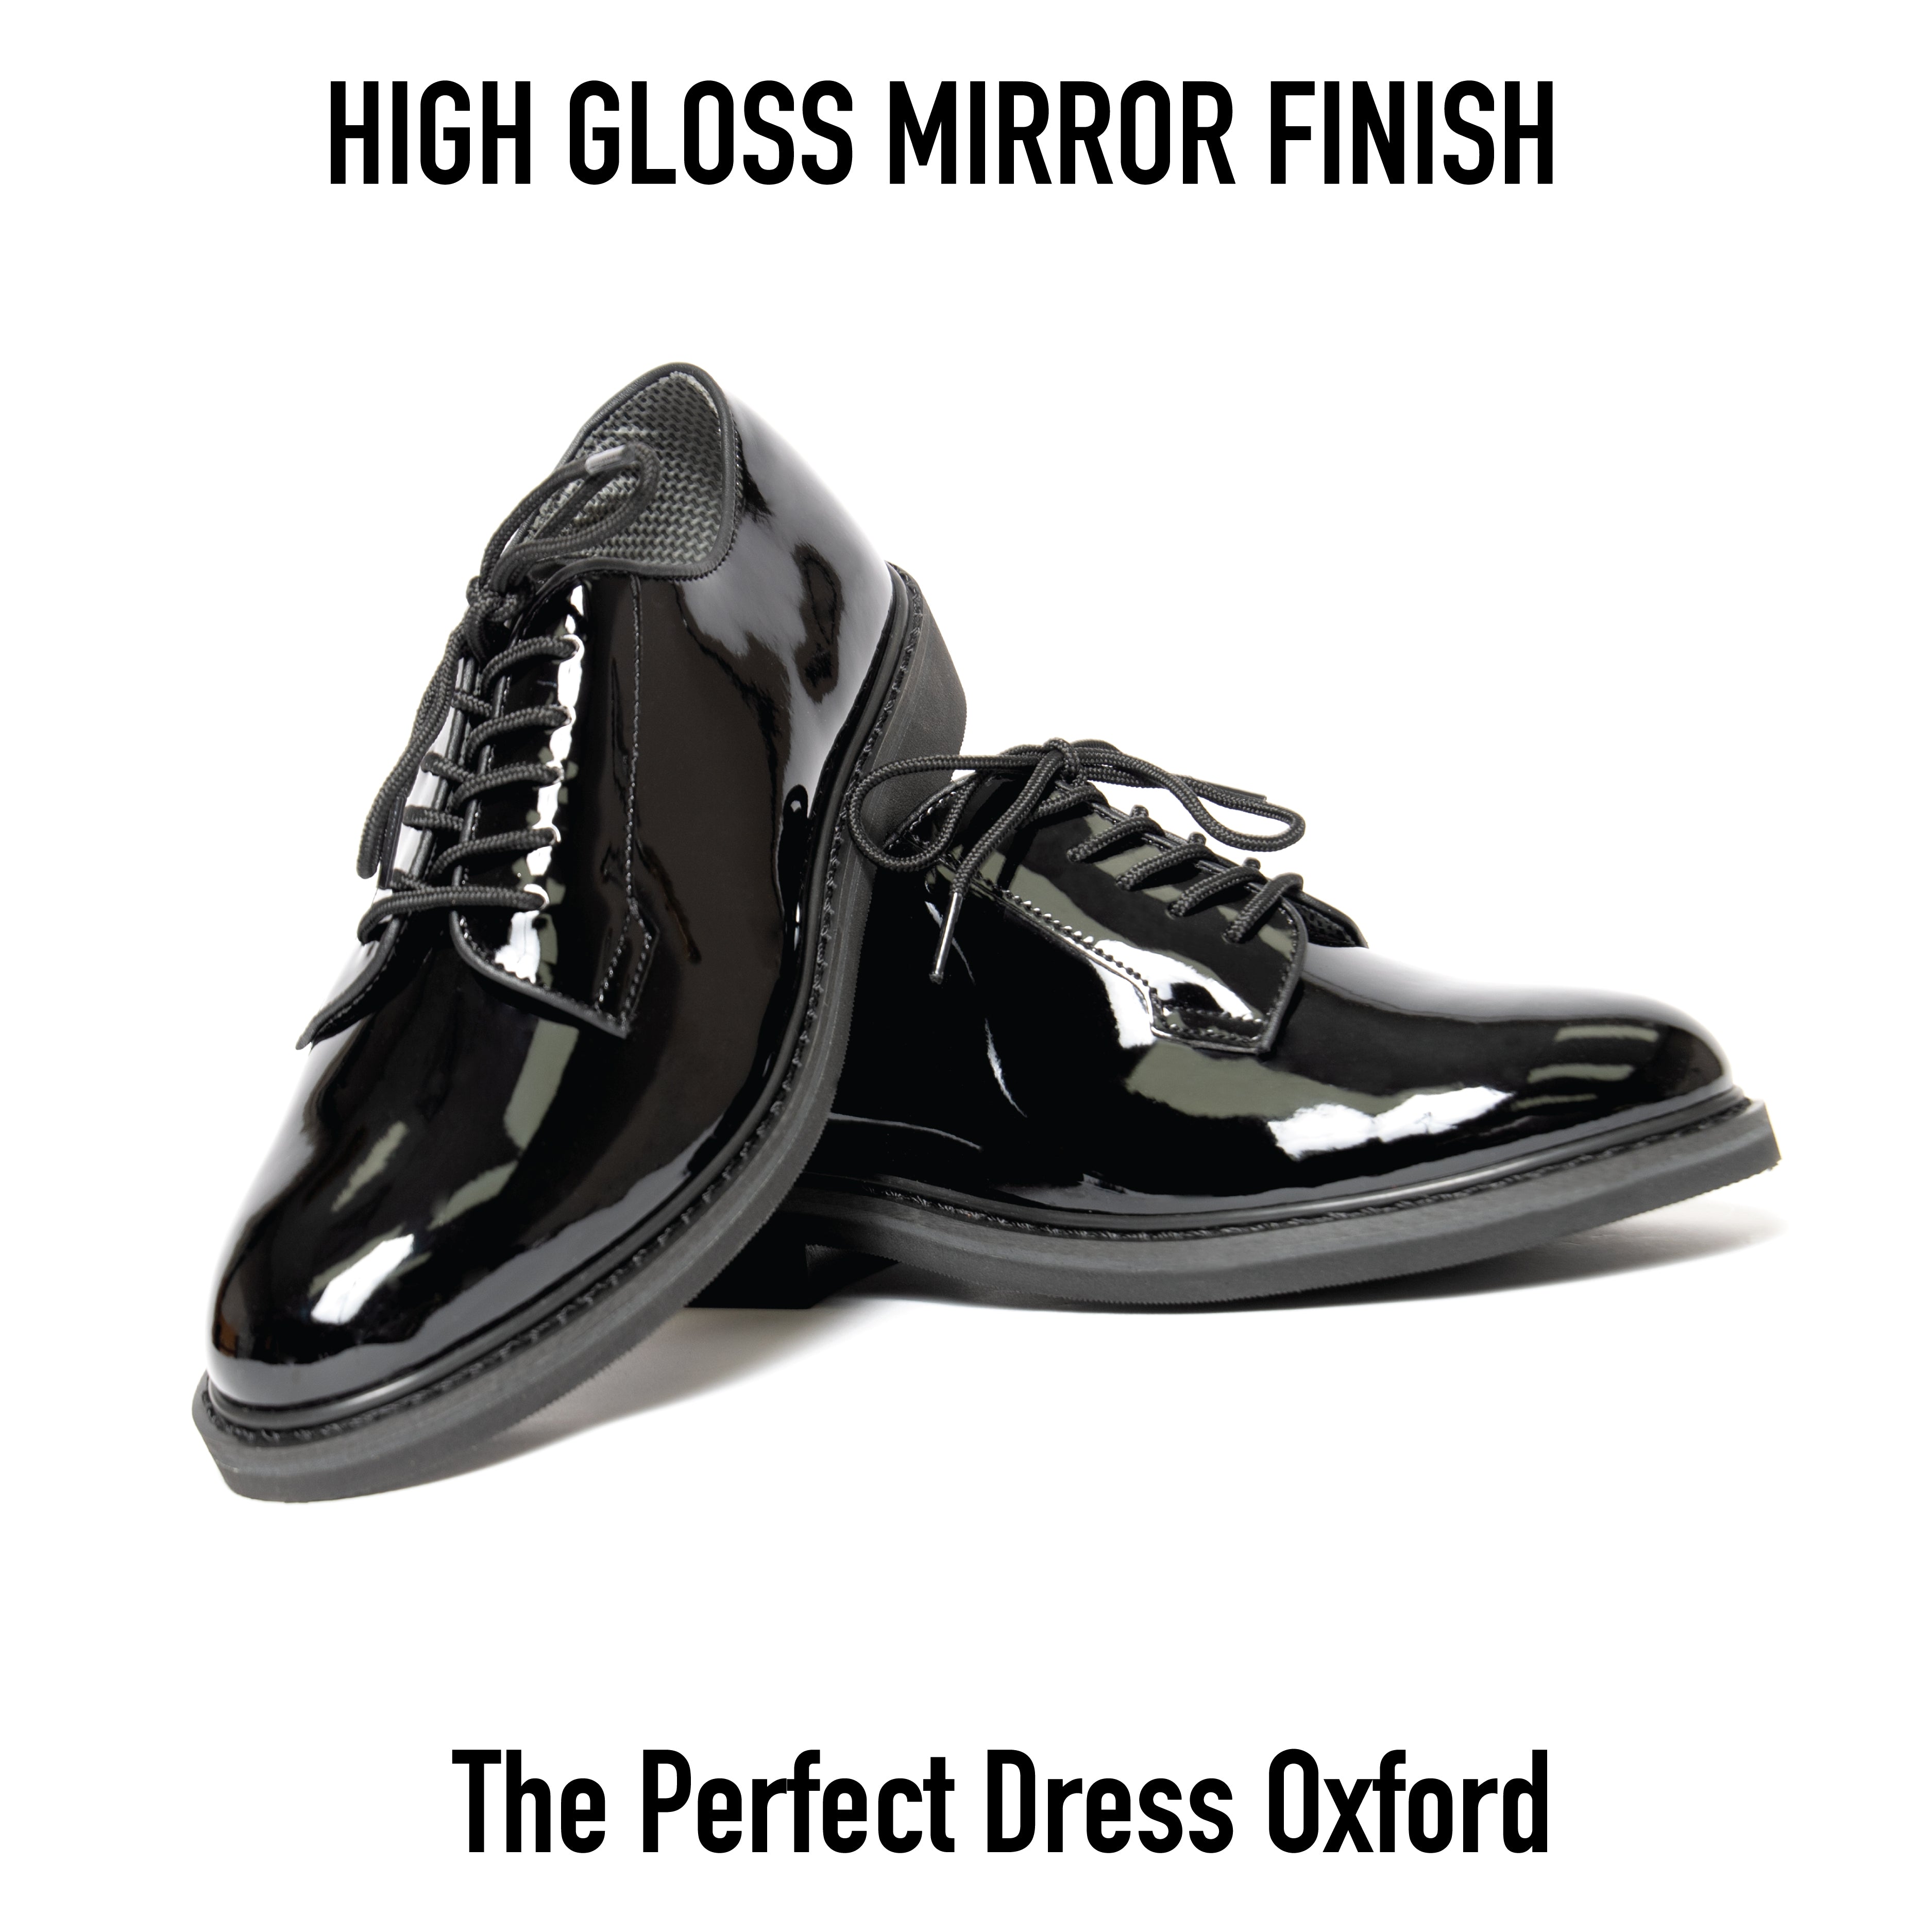 Uniform Hi-Gloss Oxford Dress Shoes